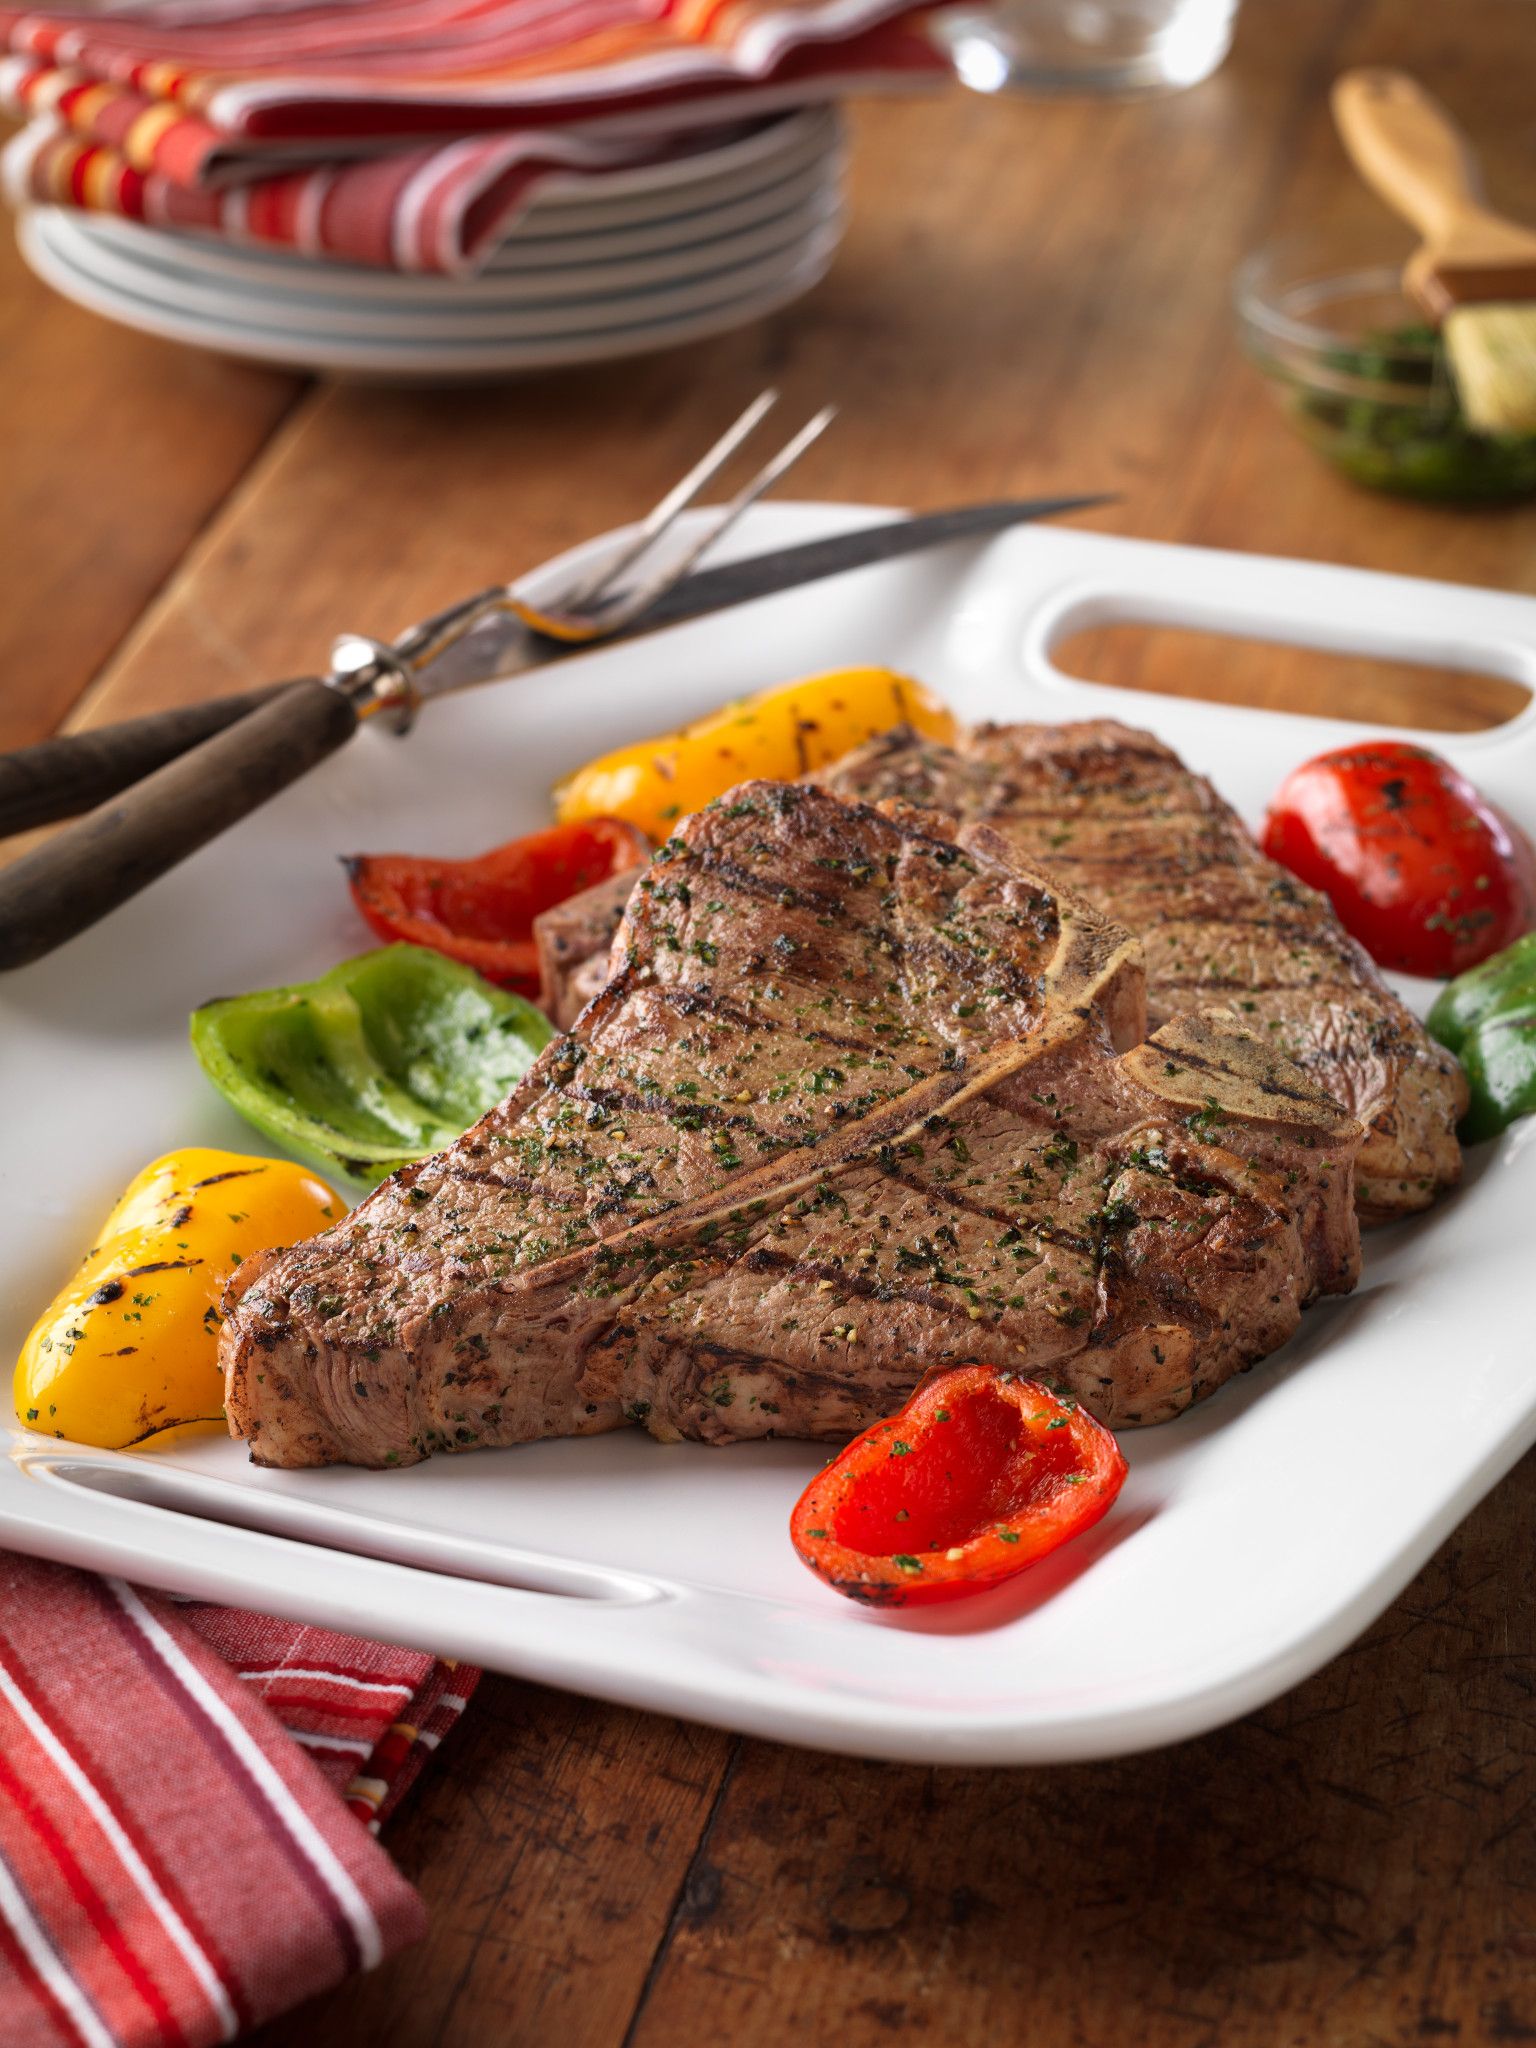 Porterhouse Steak; A Tender, Delicious Premium Cut Of Beef!